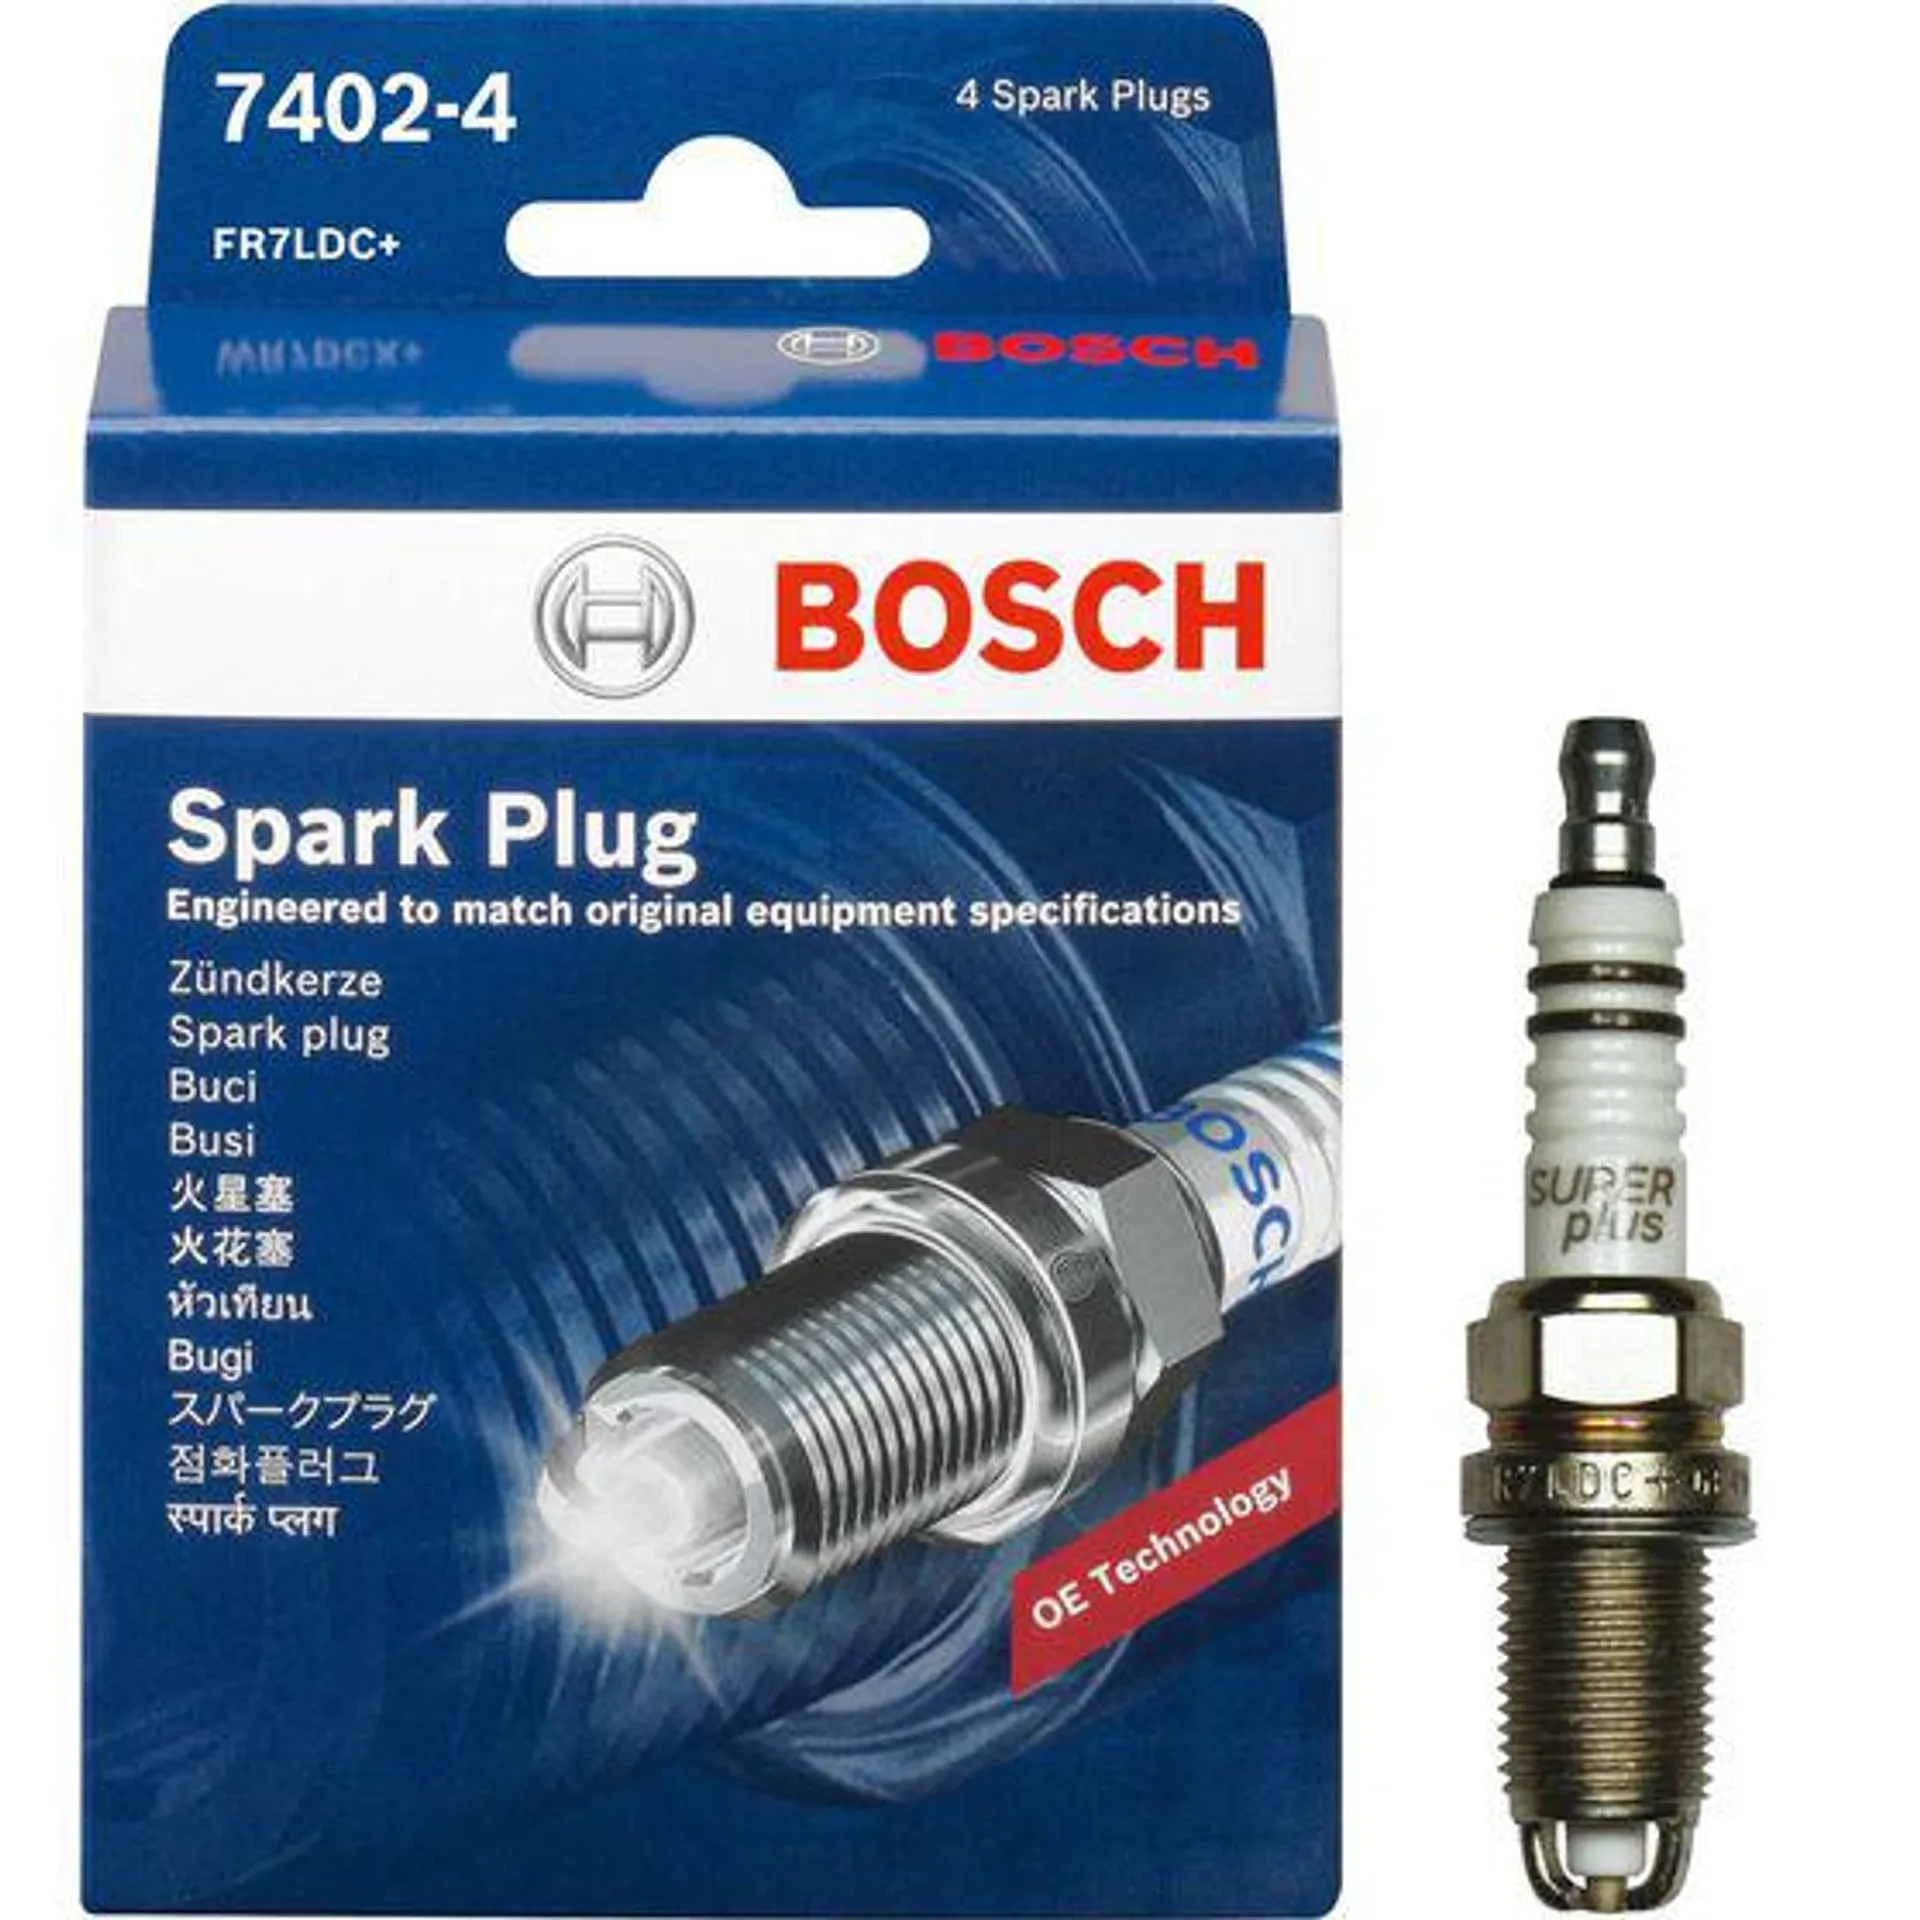 Bosch Spark Plug 7402-4 4 Pack